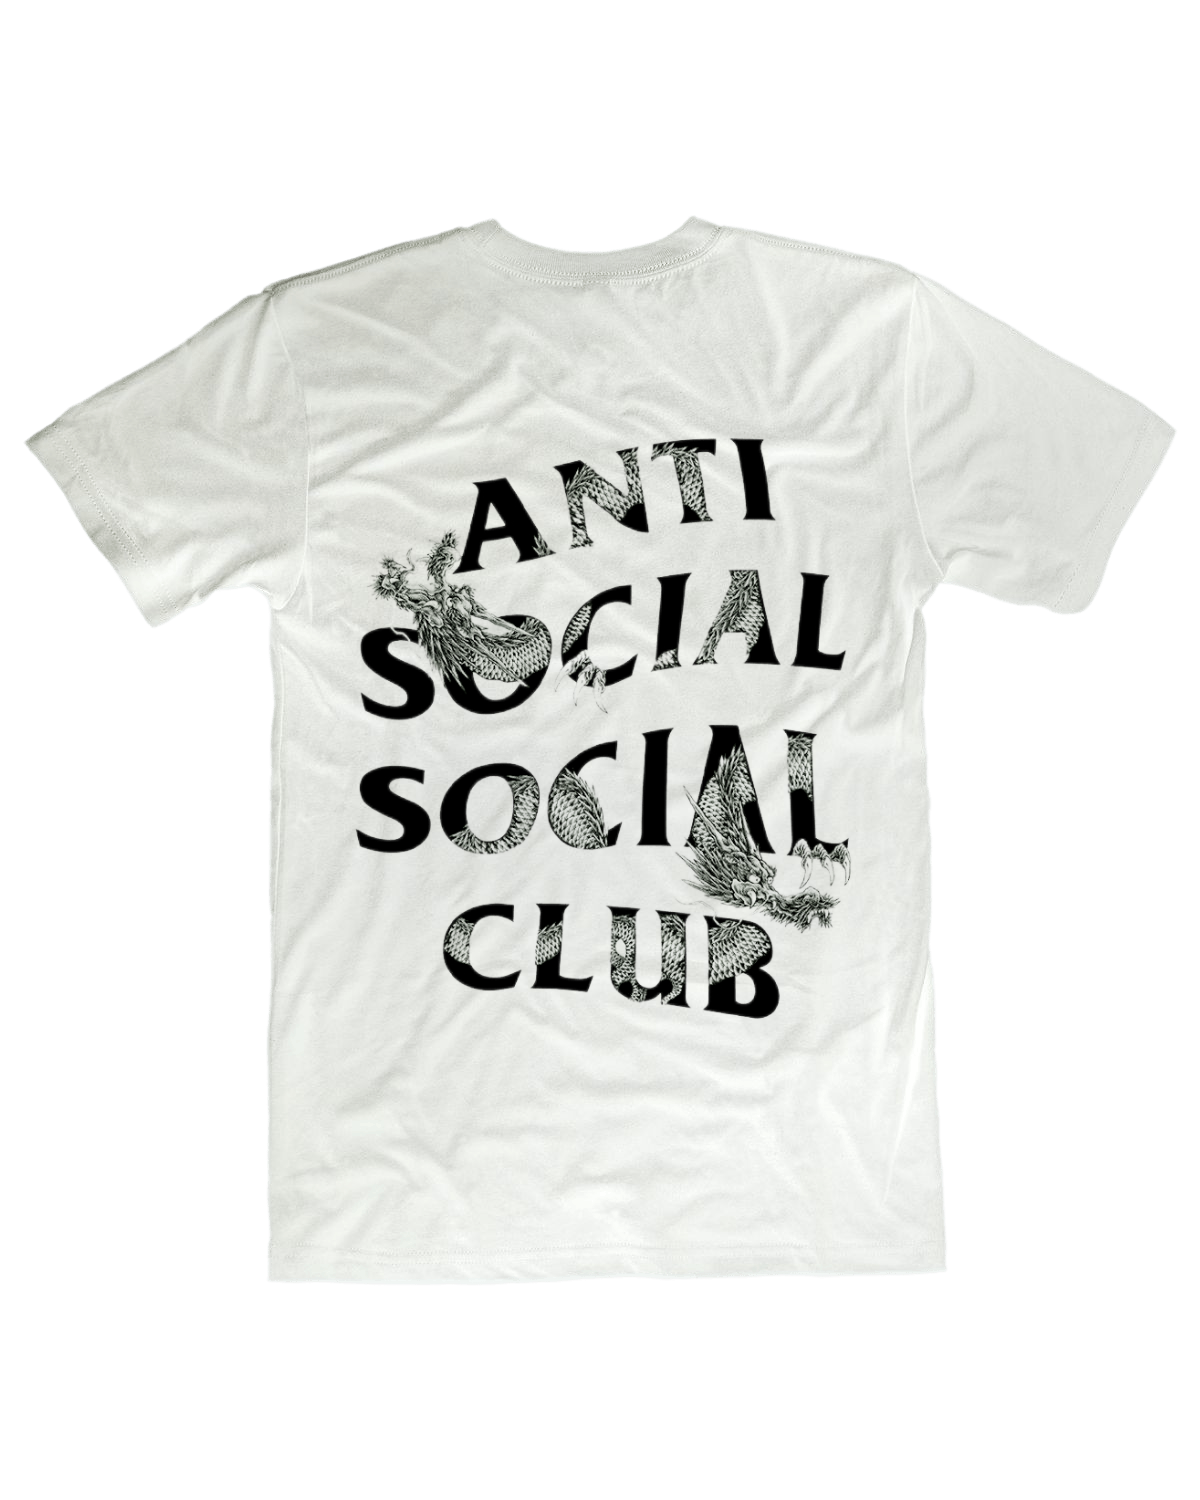 'Anti social' graphic tee